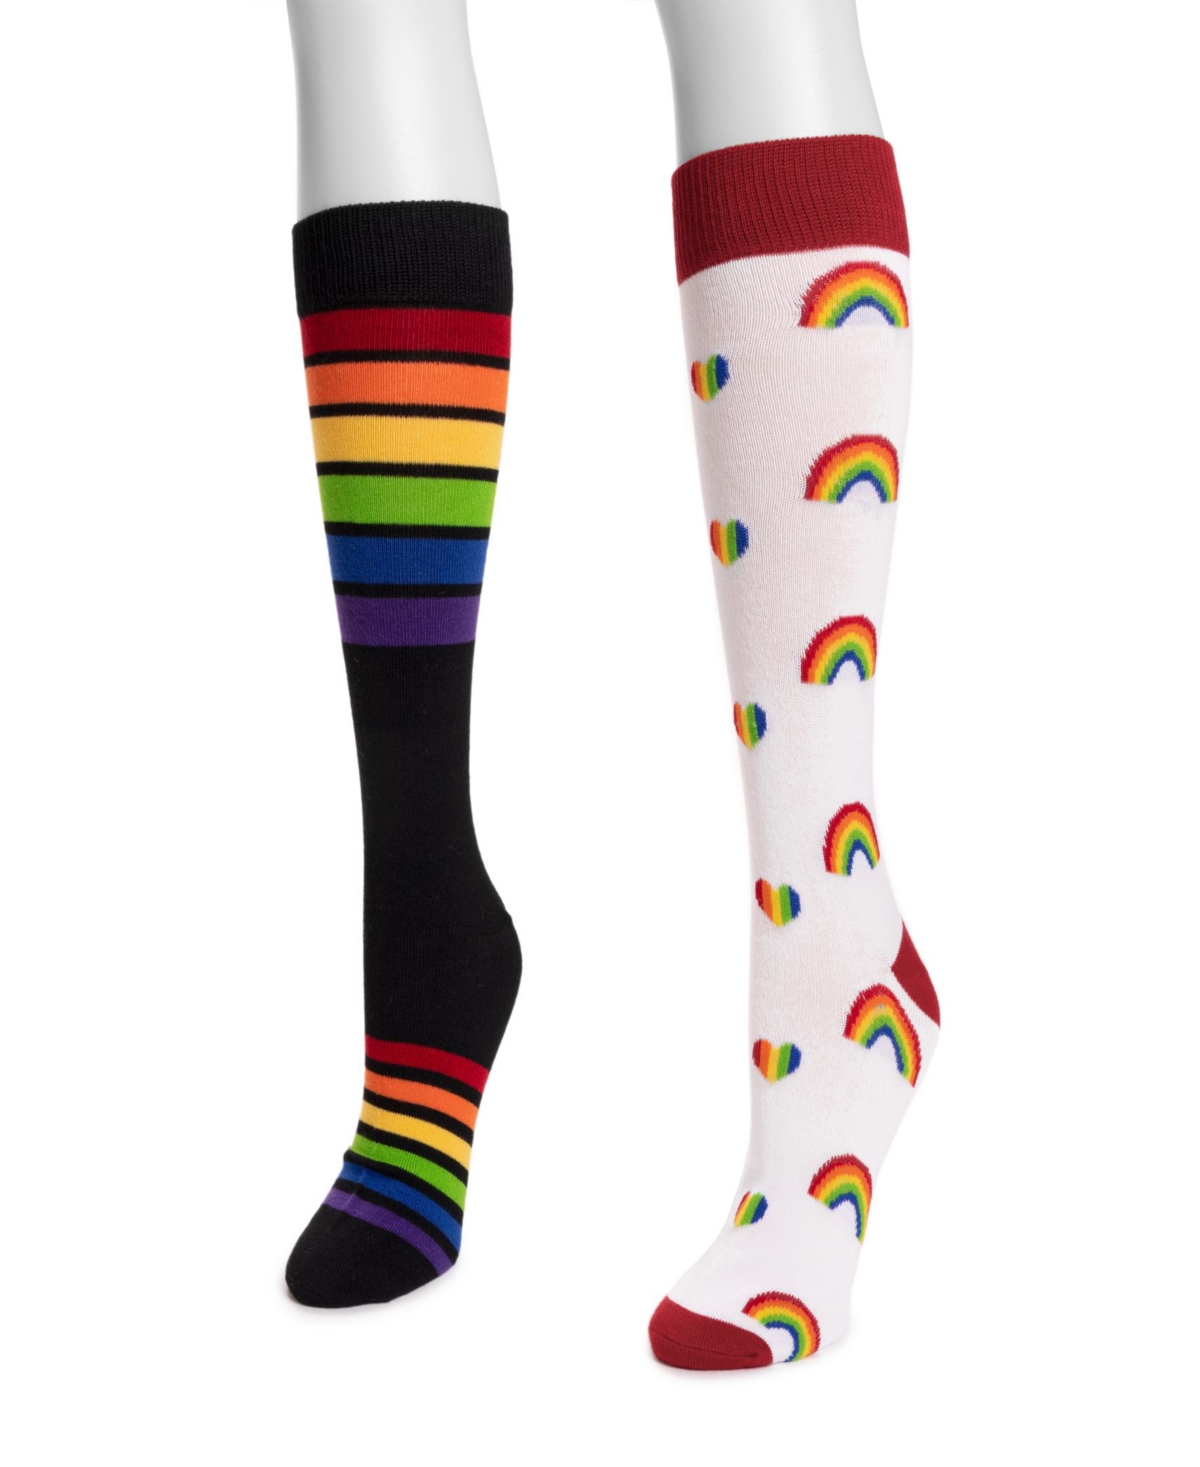 Unisex 2 Pair Pack Knee High Pride Socks - Rainbow Pa